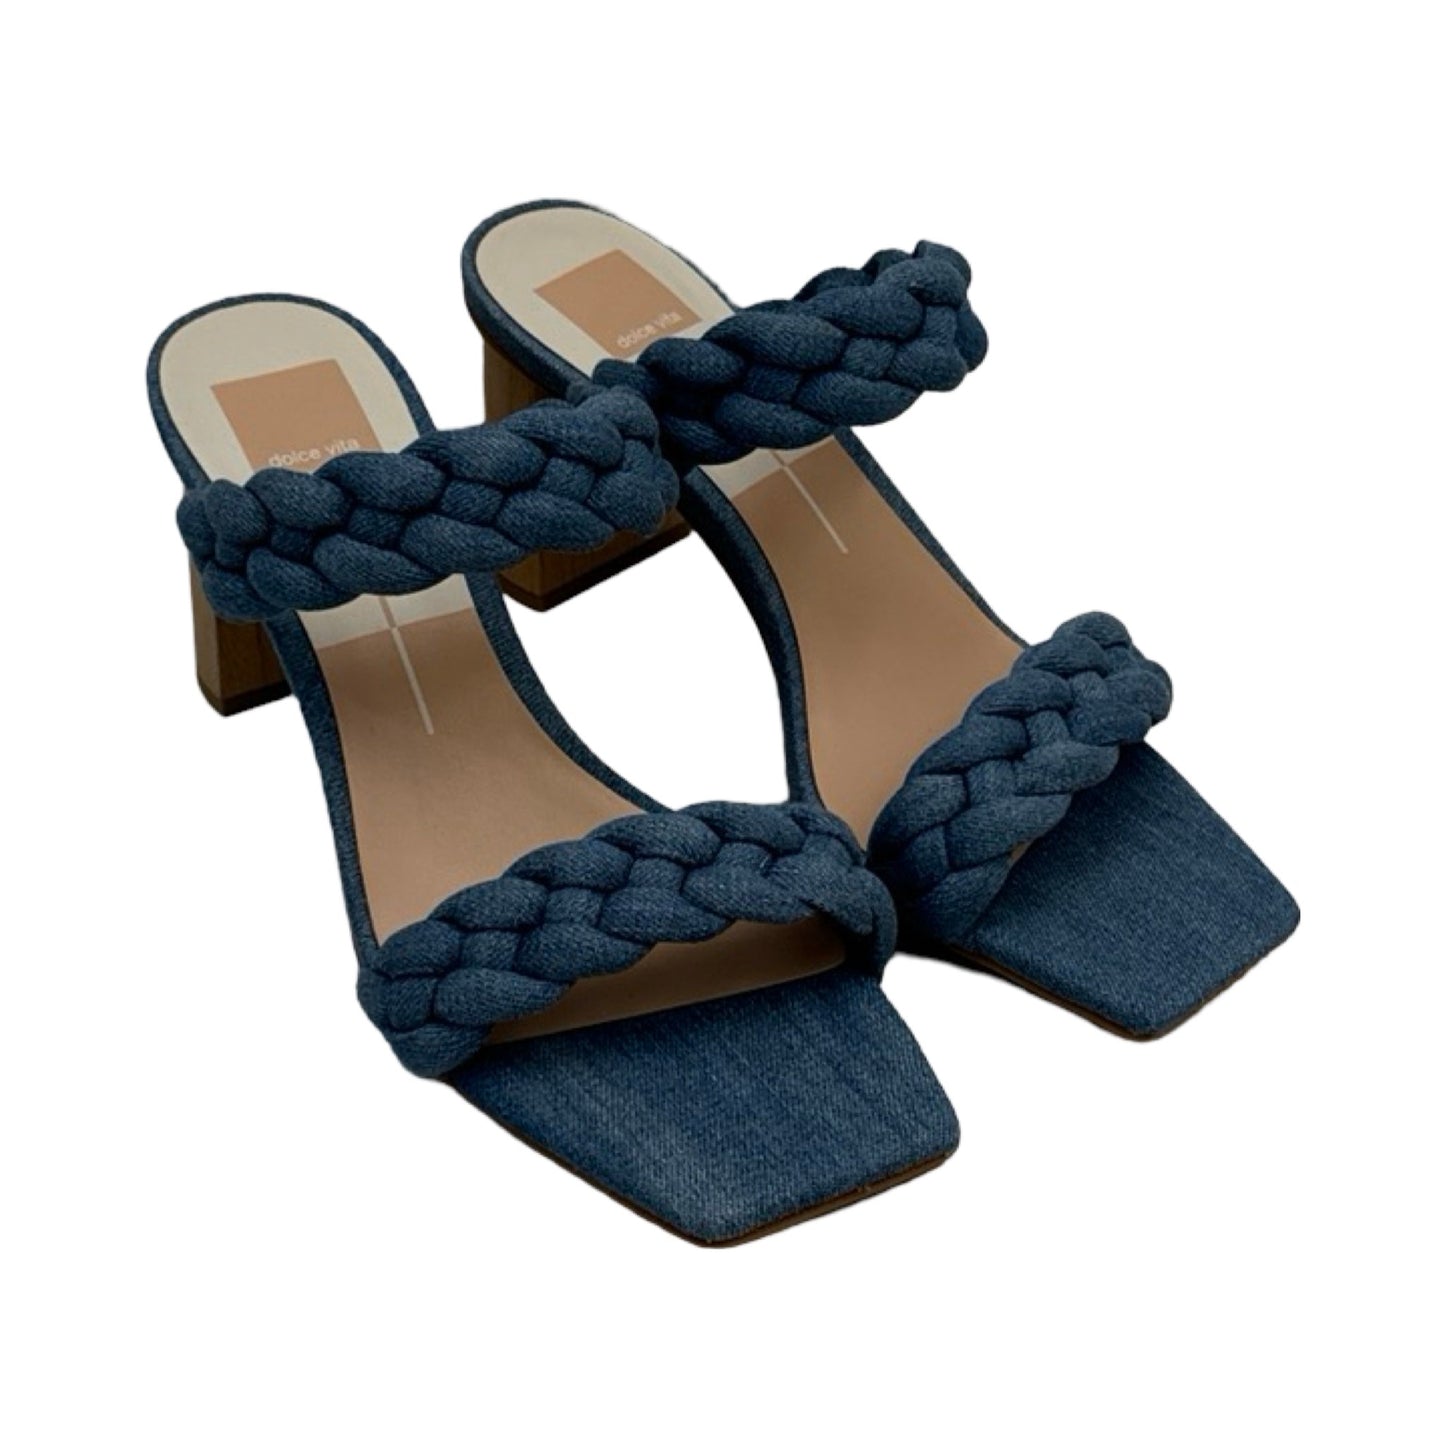 Blue Sandals Heels Block Dolce Vita, Size 9.5